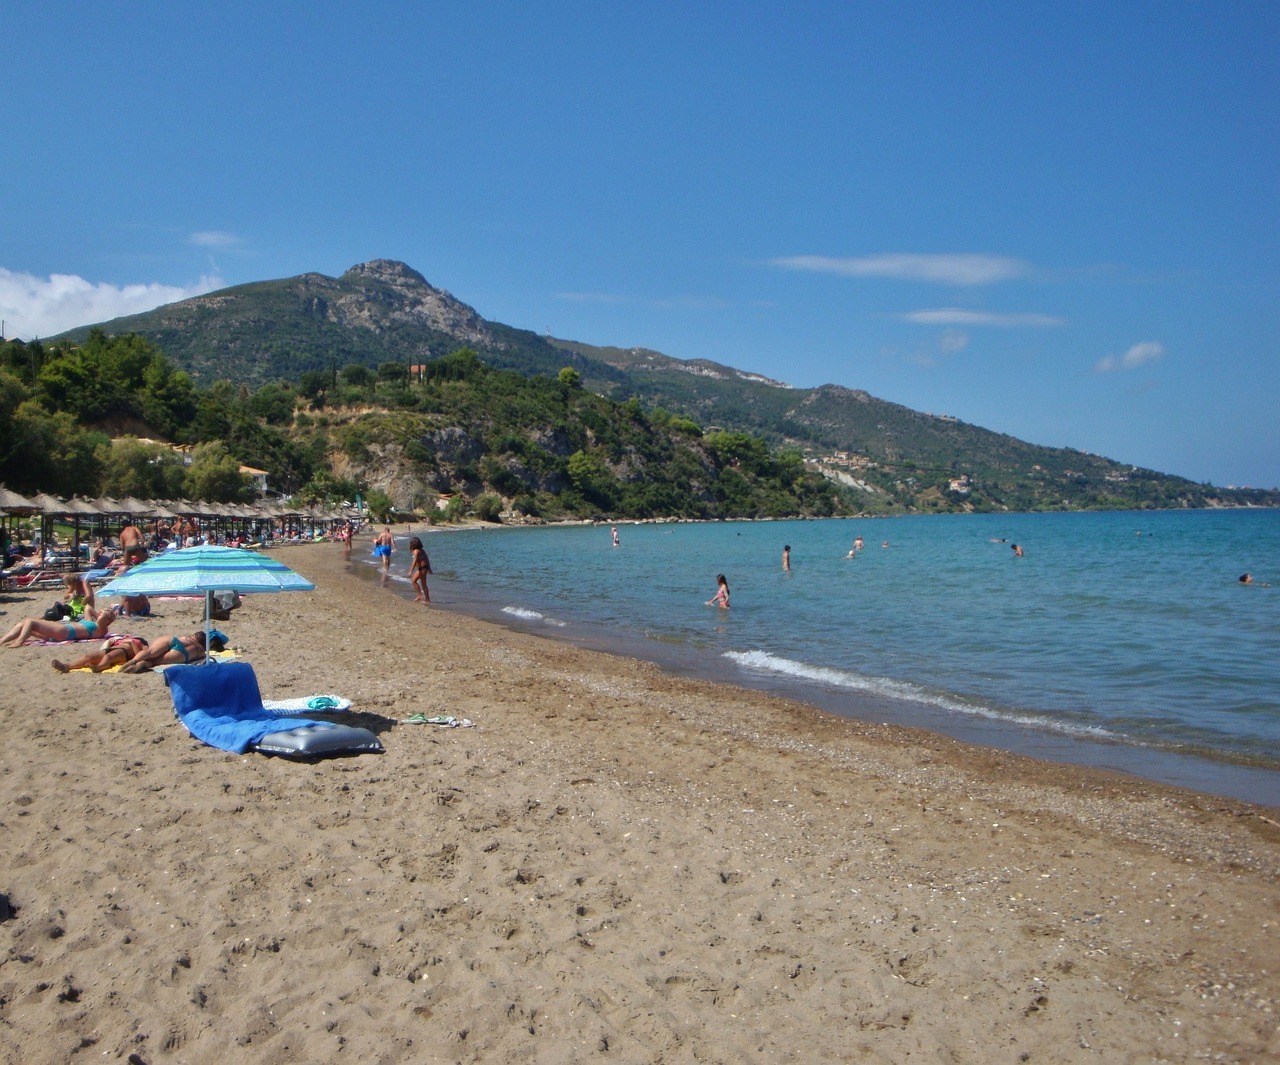 Zakynthos,island,beach,sea,greece - free image from needpix.com